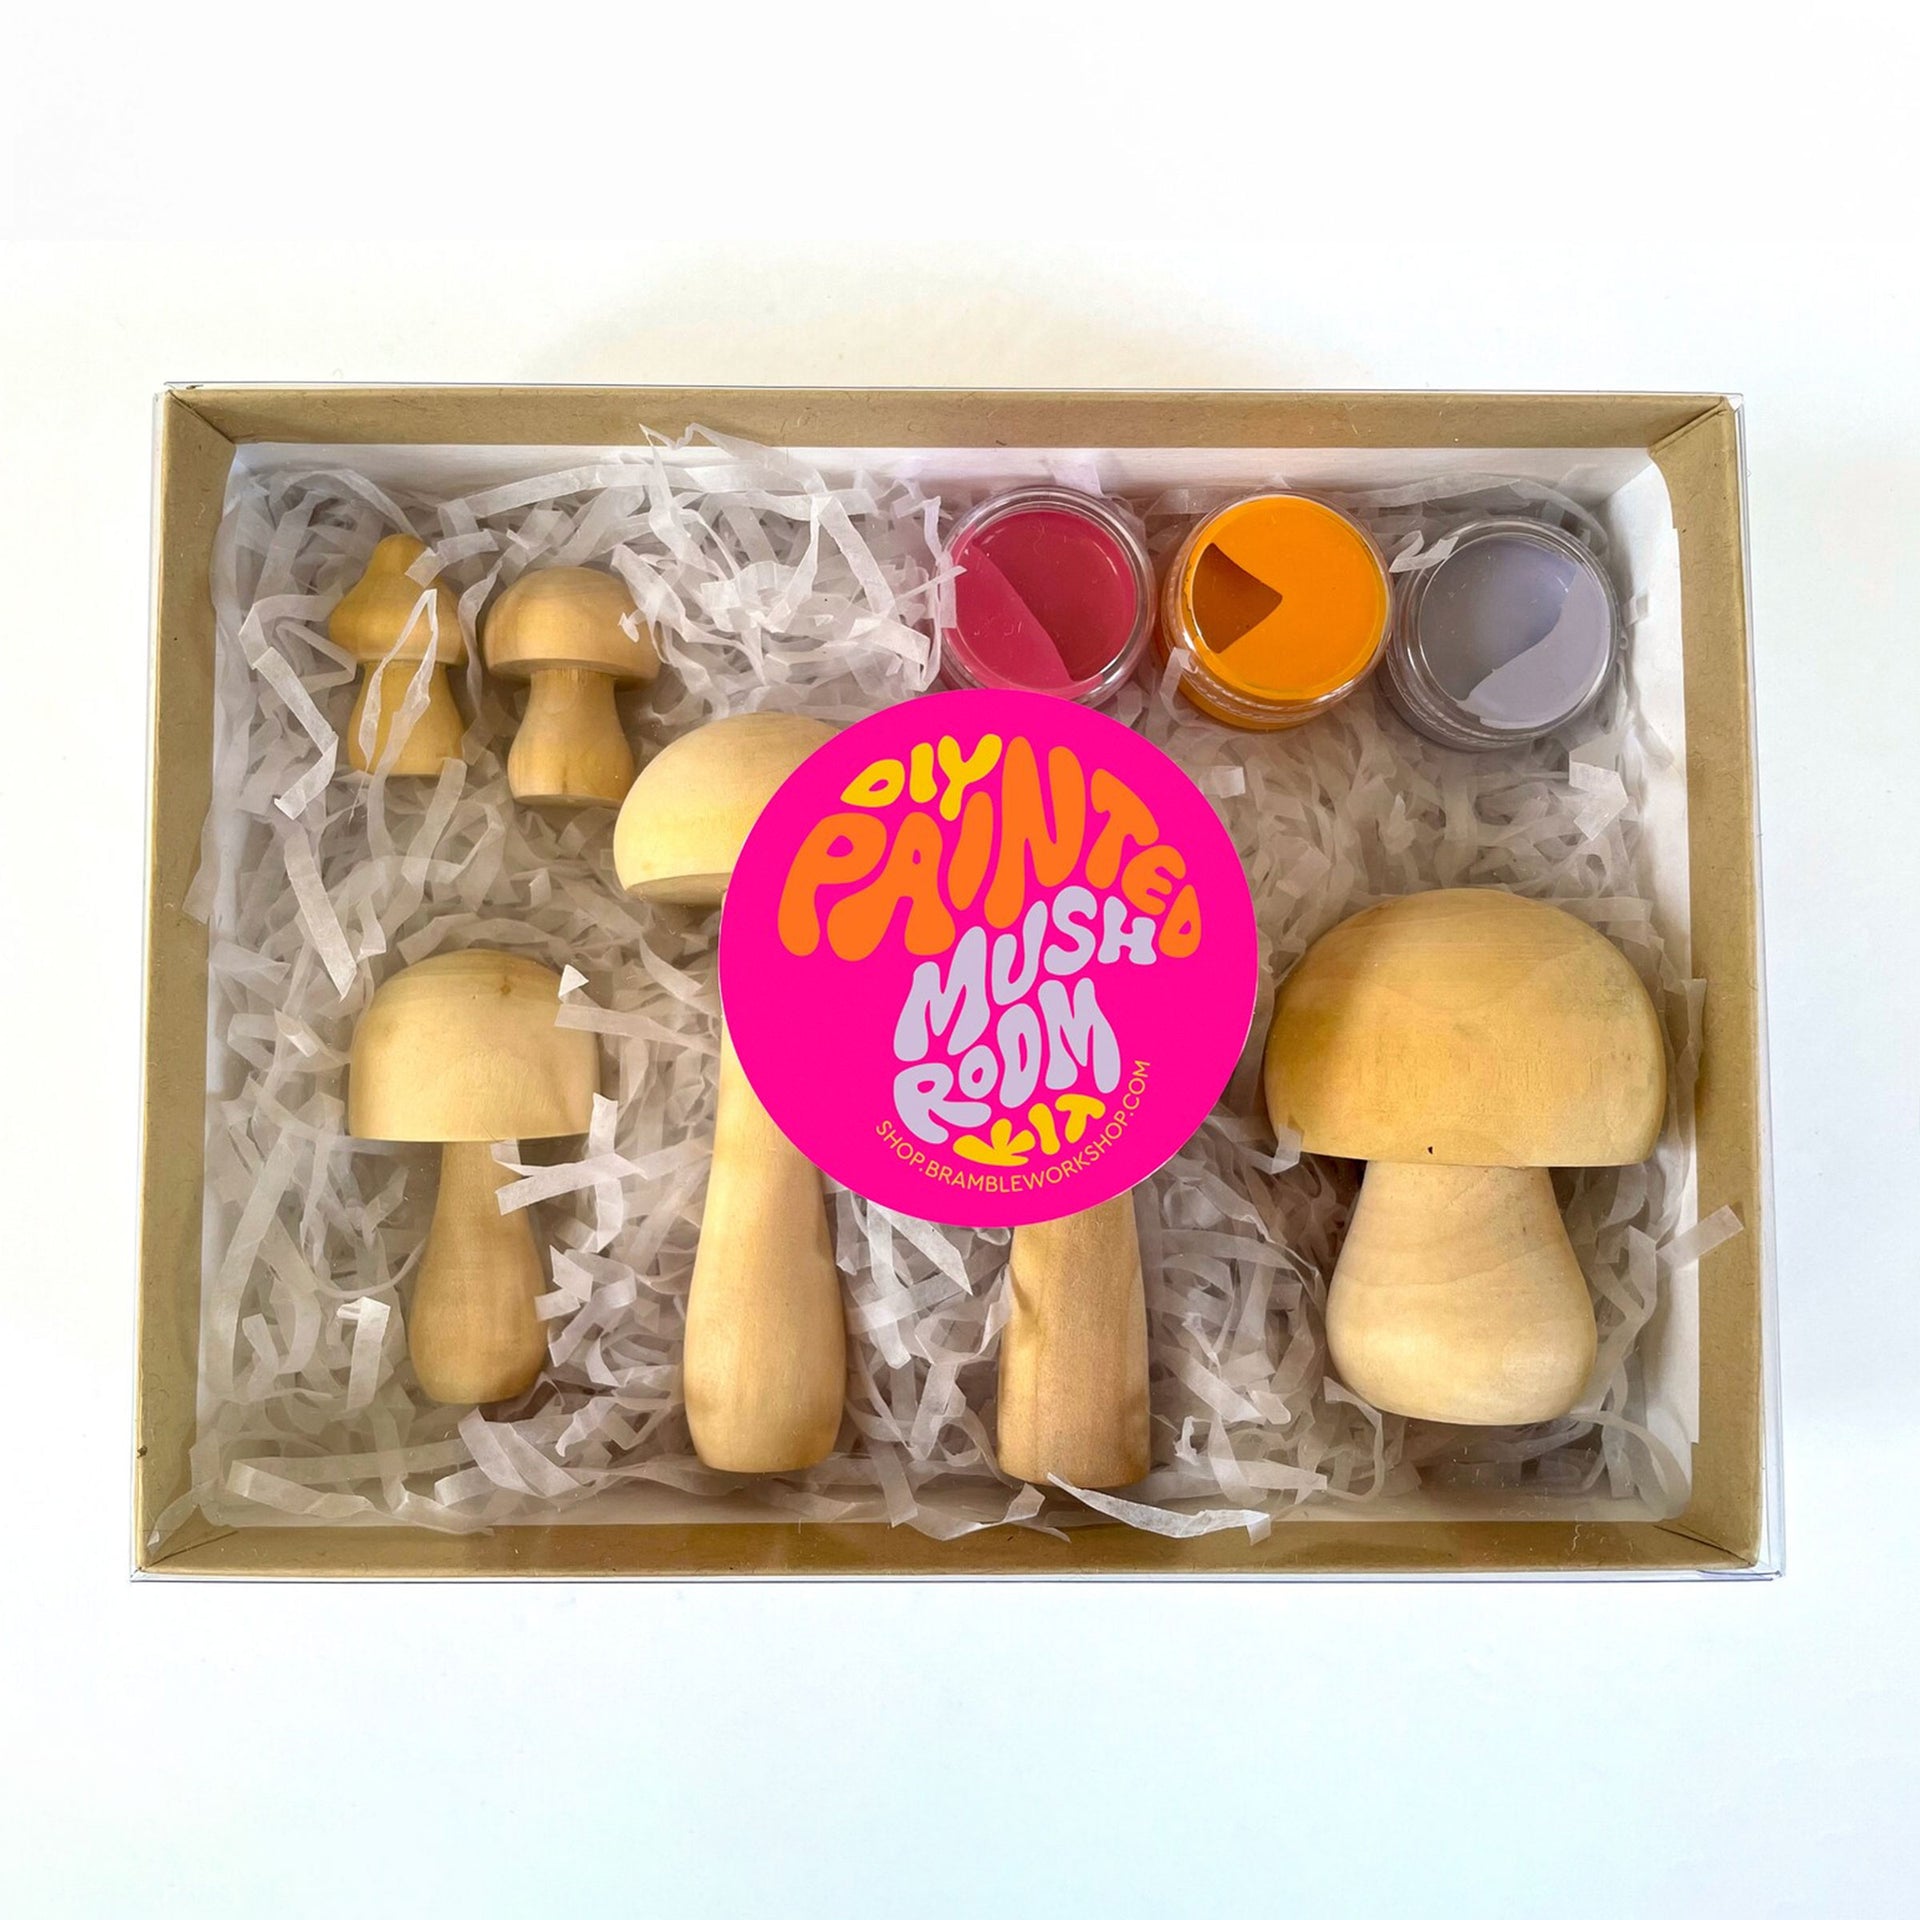 DIY Mushroom Painting Kit (10+ Yrs) – Tender Loving Empire